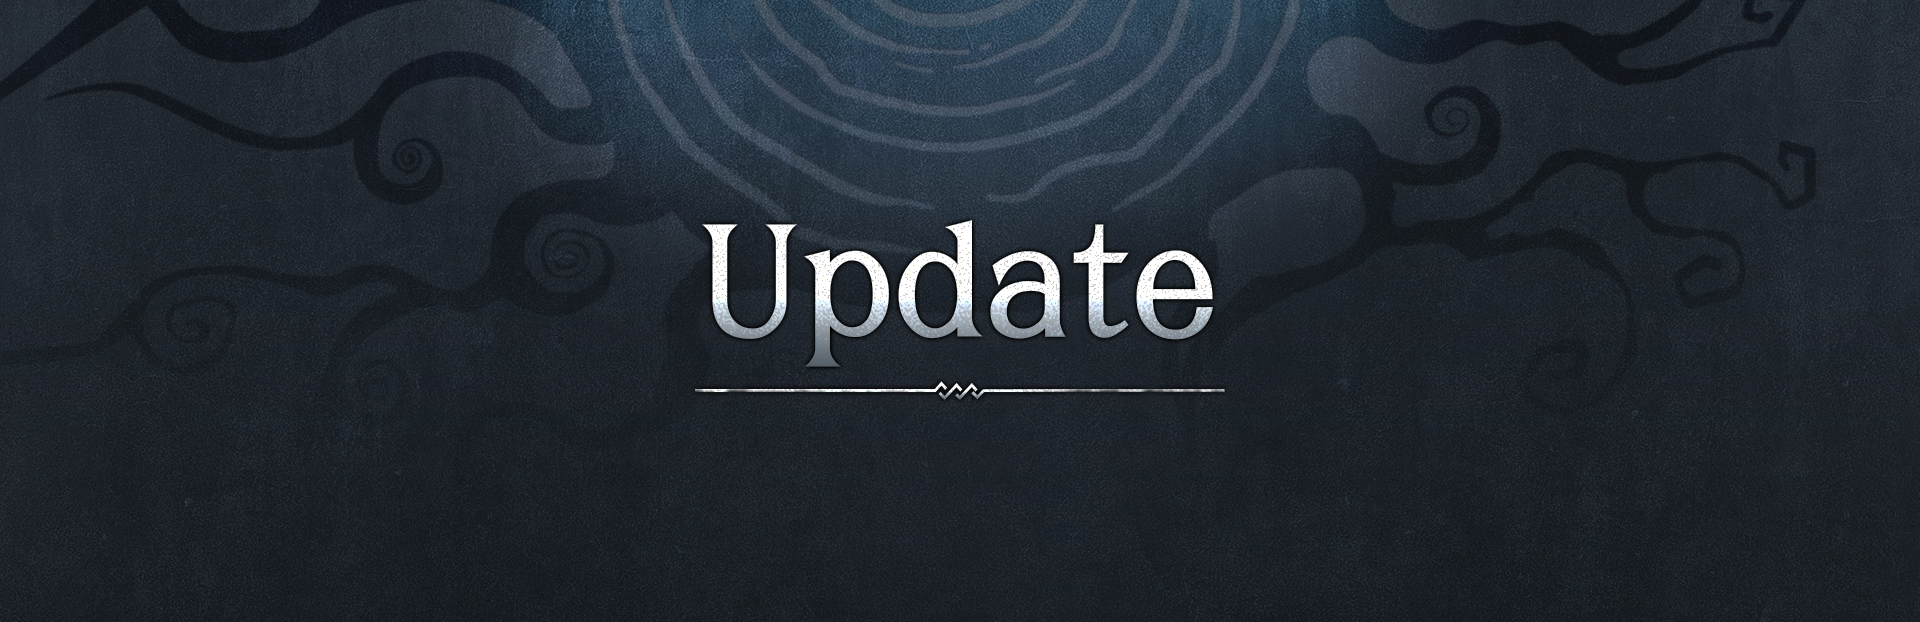 UNDECEMBER - [Announcement] Current status on Steam release - Steam News